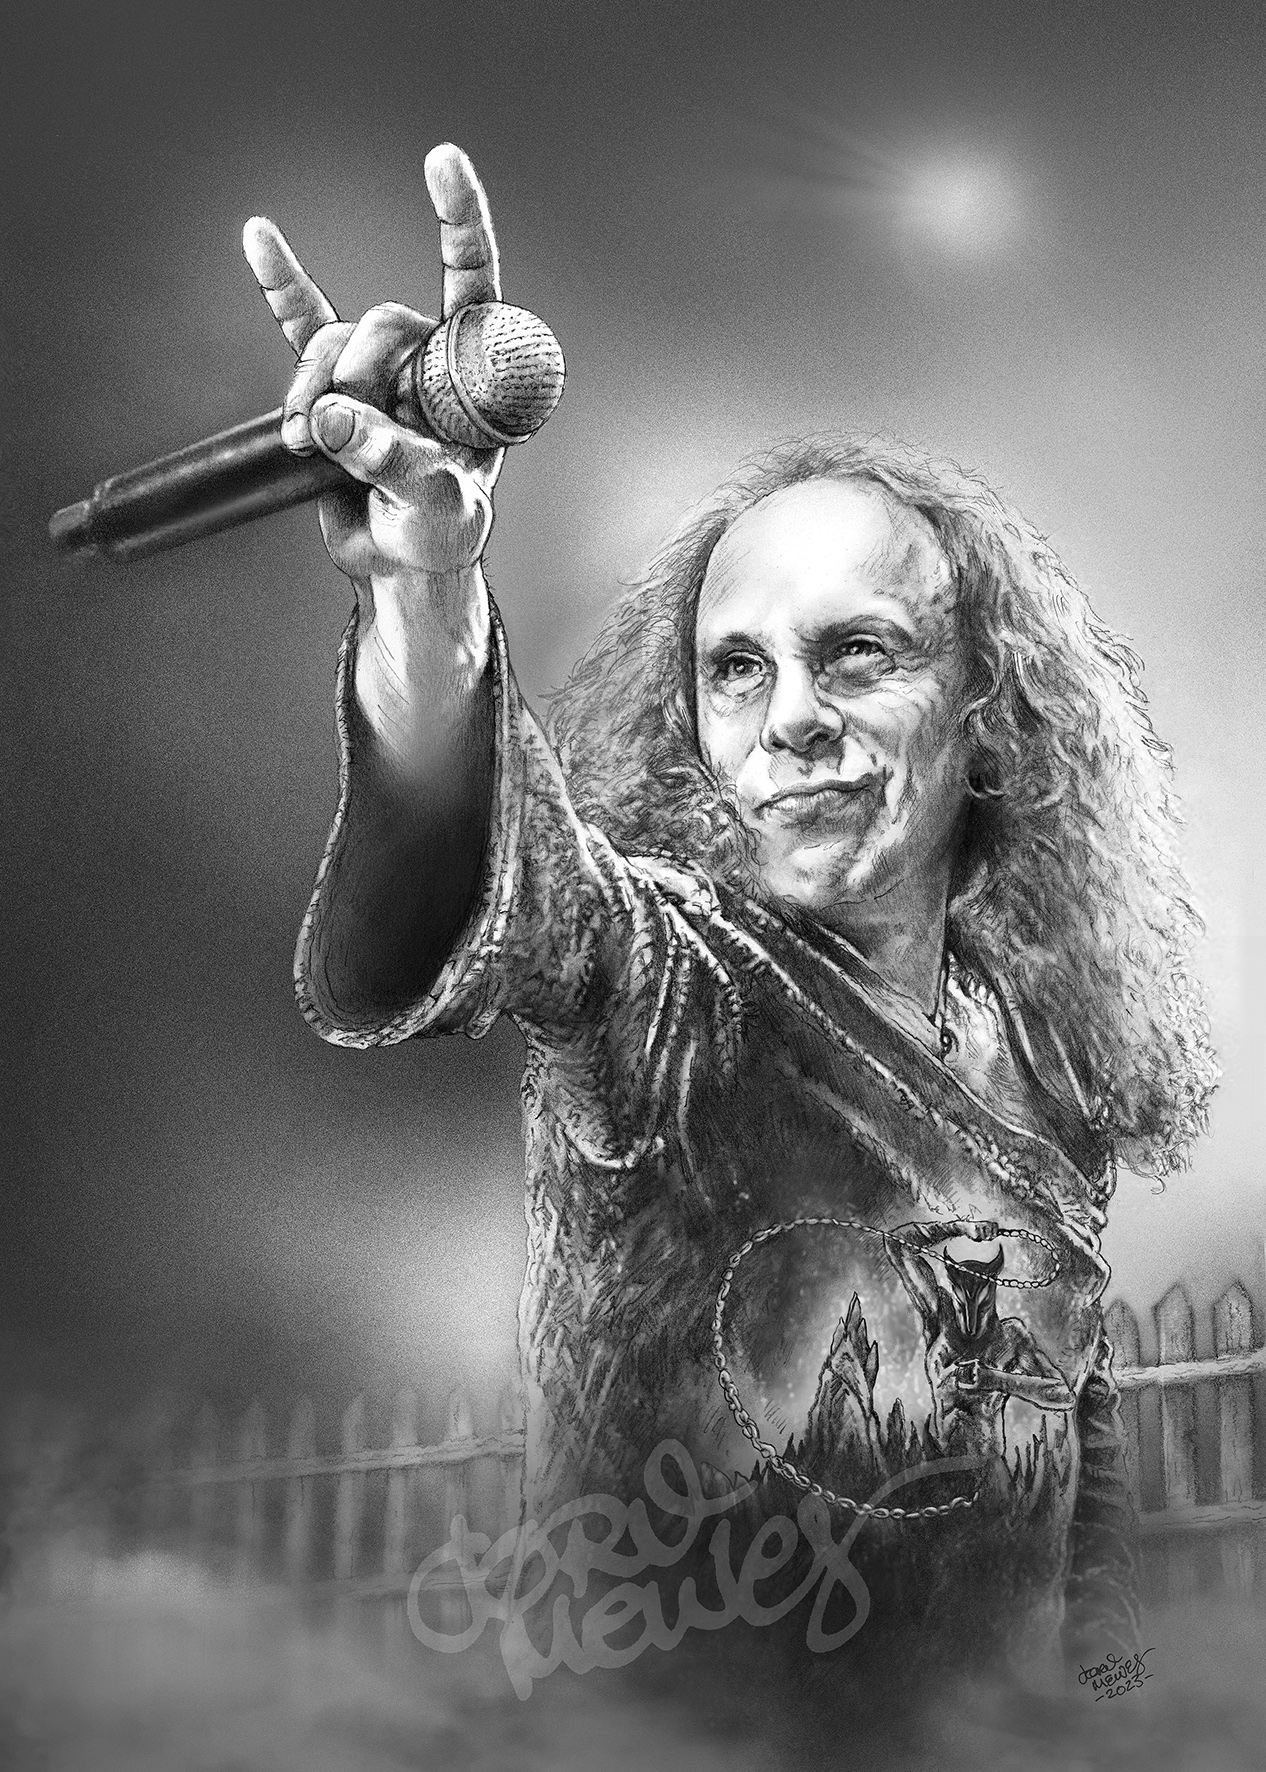 Tegnet portrett: Ronnie James Dio (Dio, Black Sabbath) av Jørn Melnes (tegning, kunstprint, poster, plakat, hard rock, heavy metal, portrait art, pencil drawing)